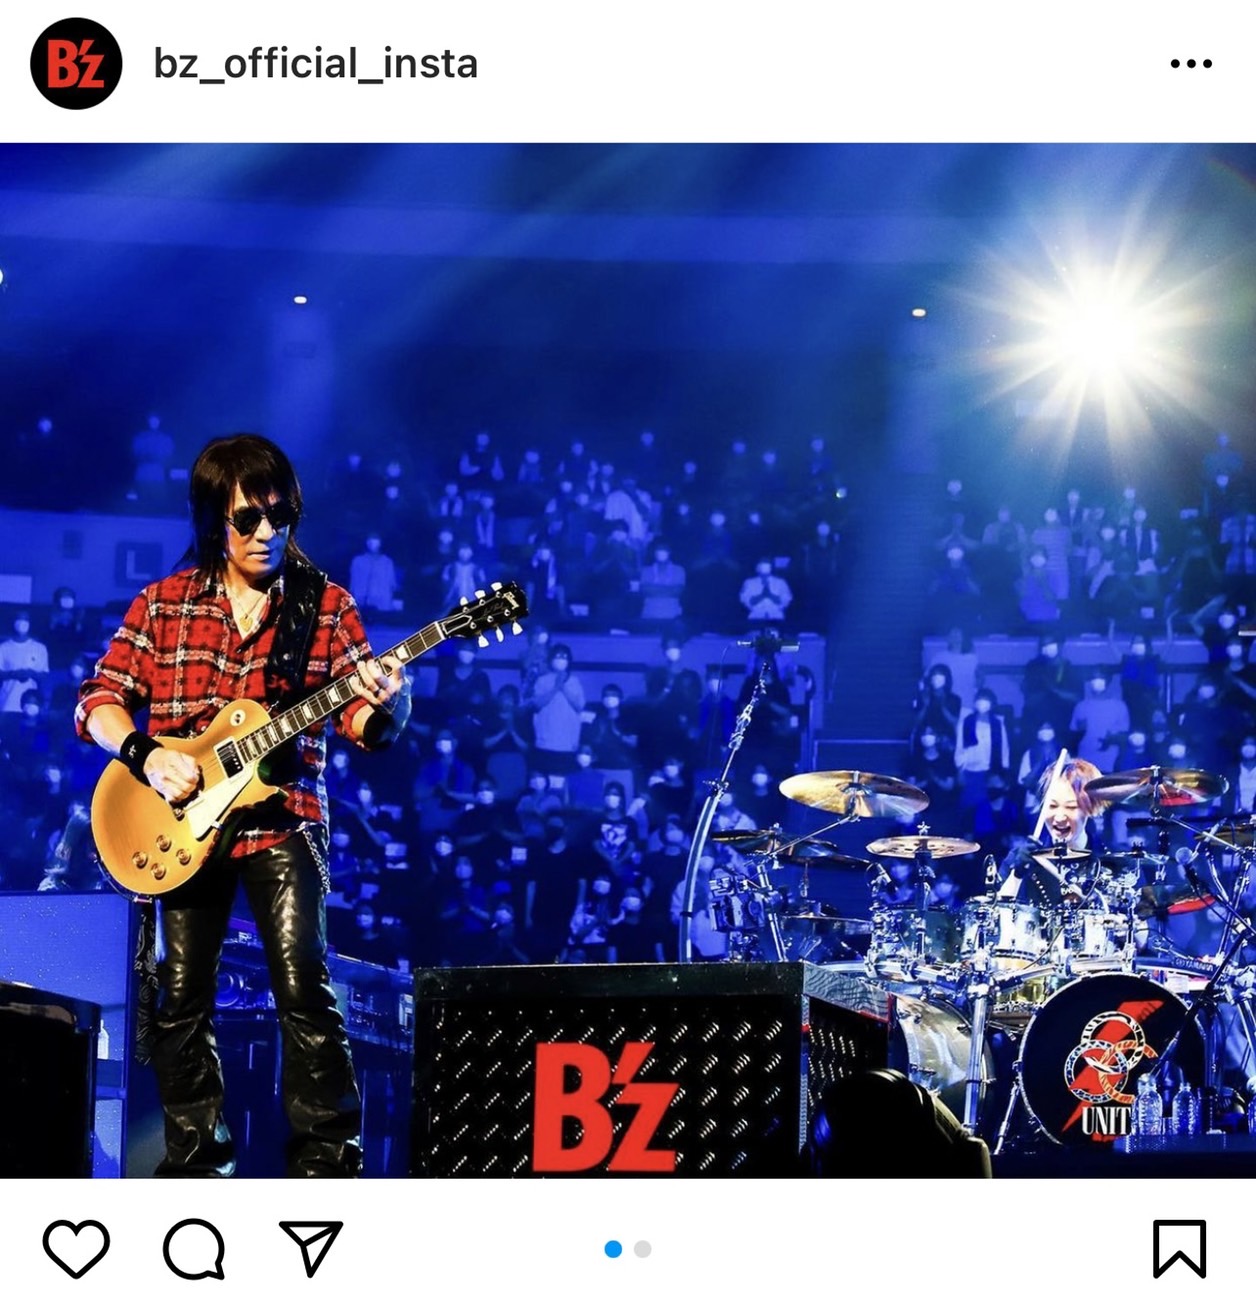 B'z公式Instagramに投稿された『B’z presents UNITE #01』大阪公演のステージ写真（ギター・松本孝弘）